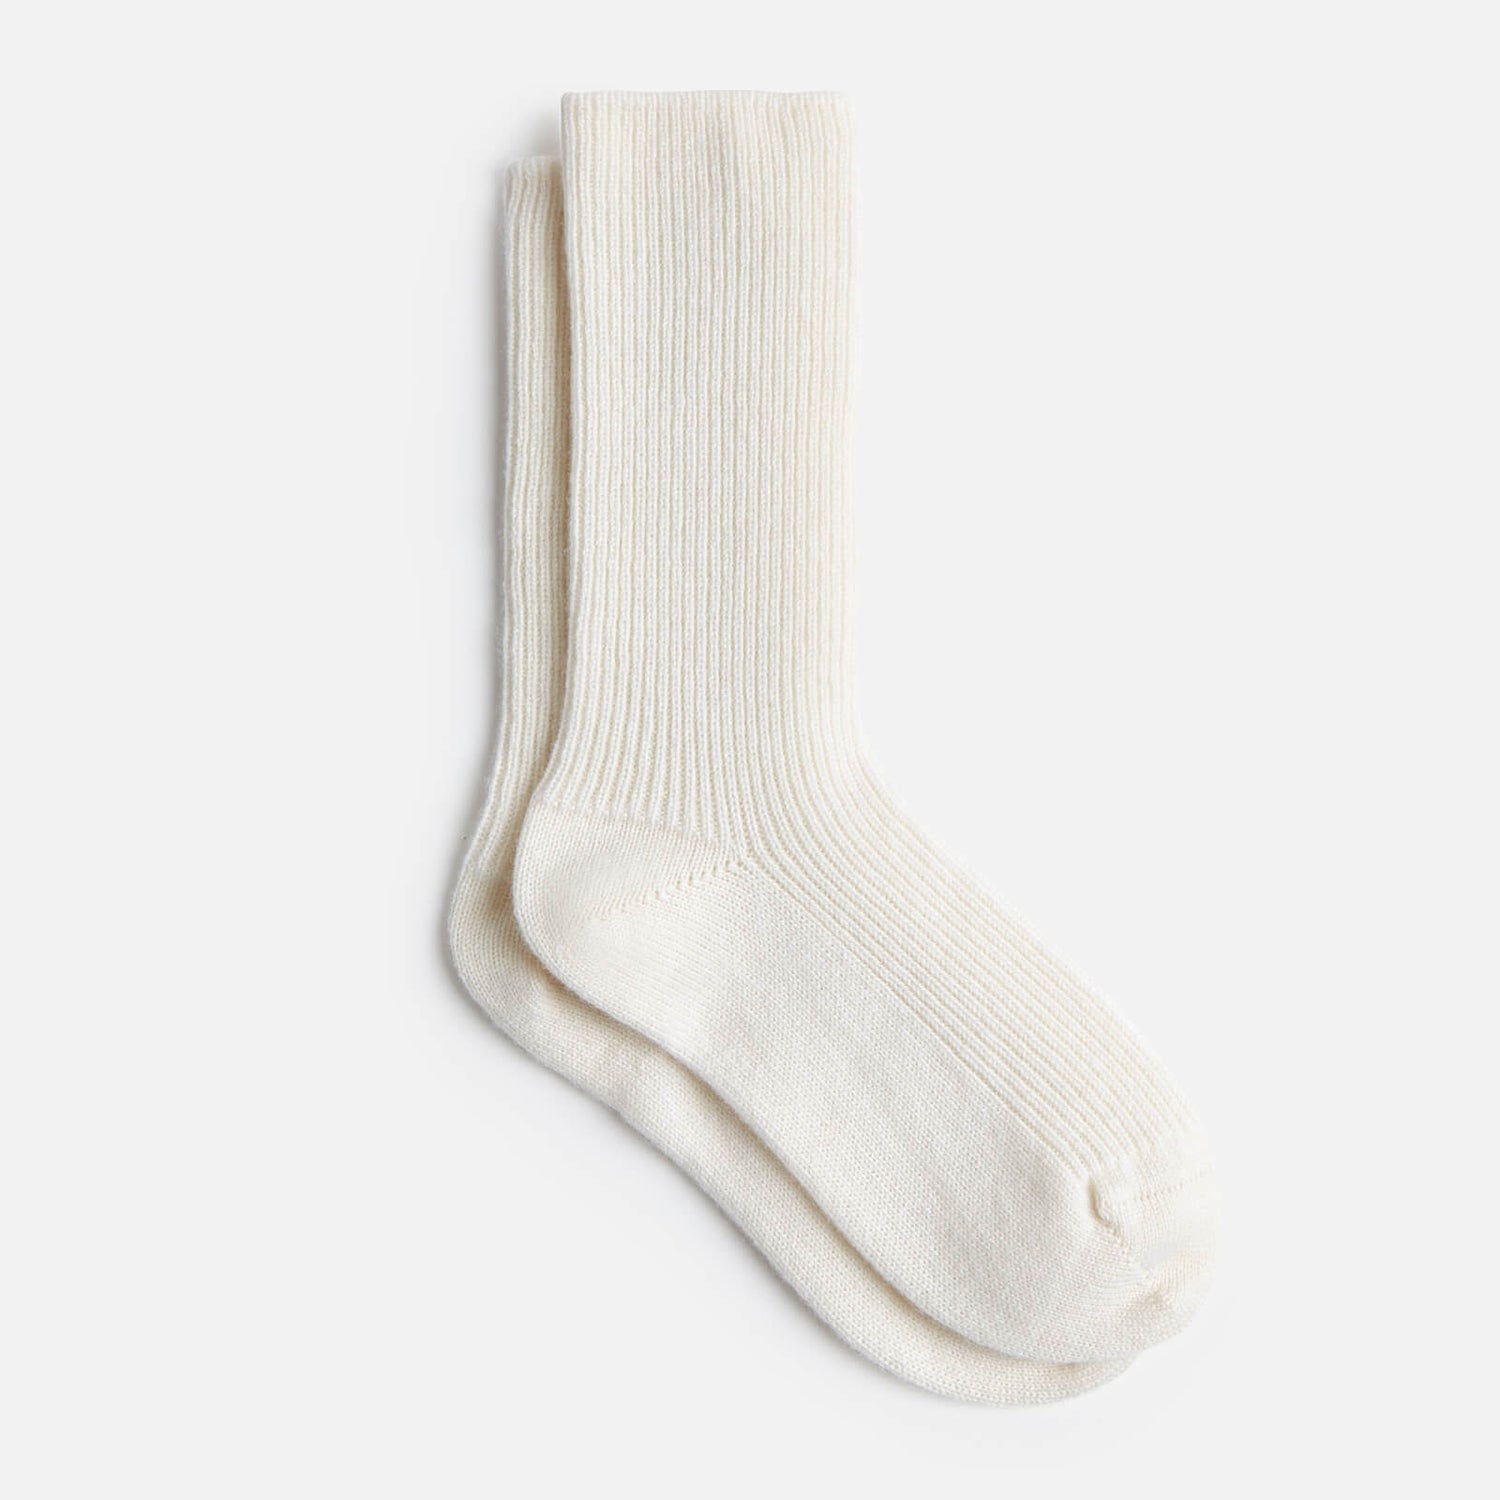 ESPA White Cashmere Ribbed Knit Socks | ESPA